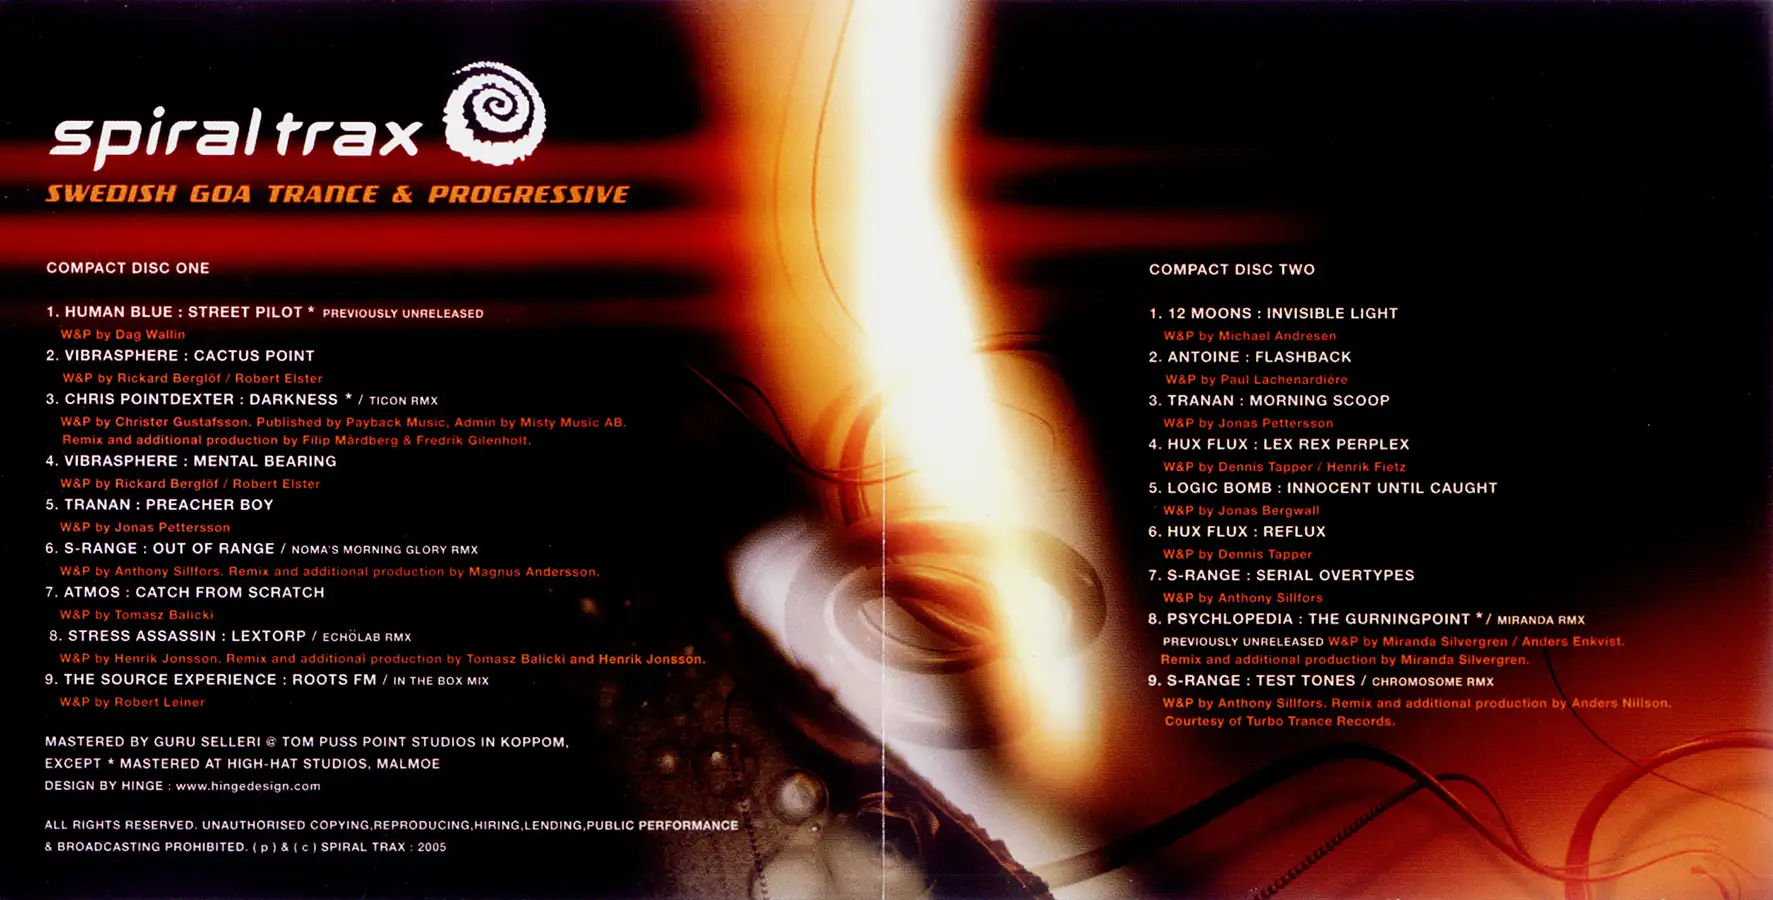 Spiral Trax - Swedish Goa Trance & Progressive compilation, CD from 2005 at  PsyDB